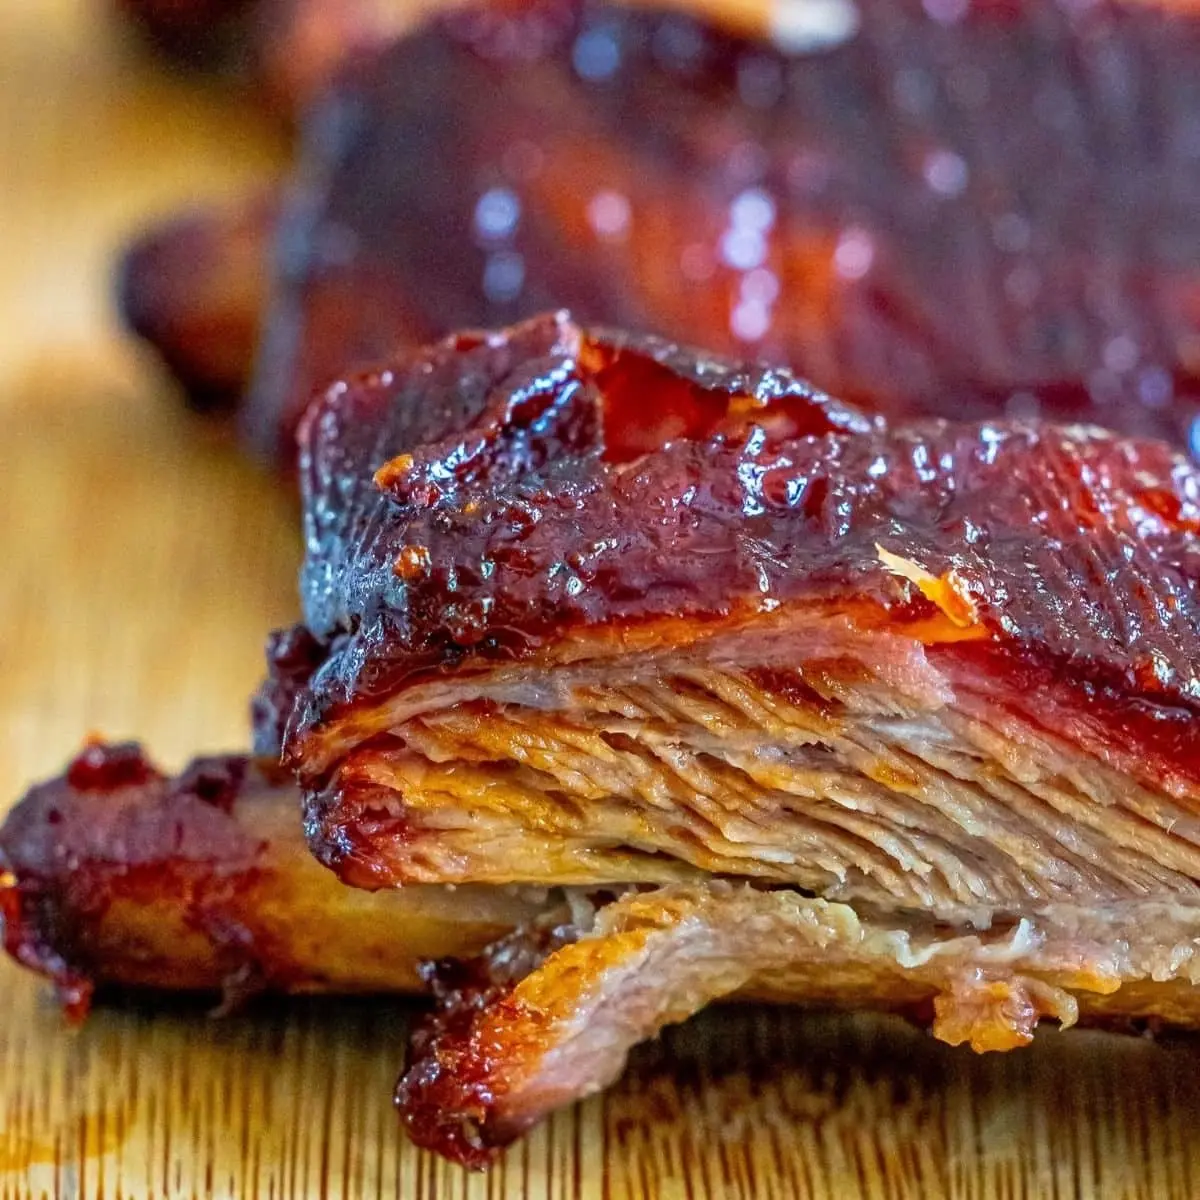 ribs smoked recipe - Do you have to soak ribs before smoking